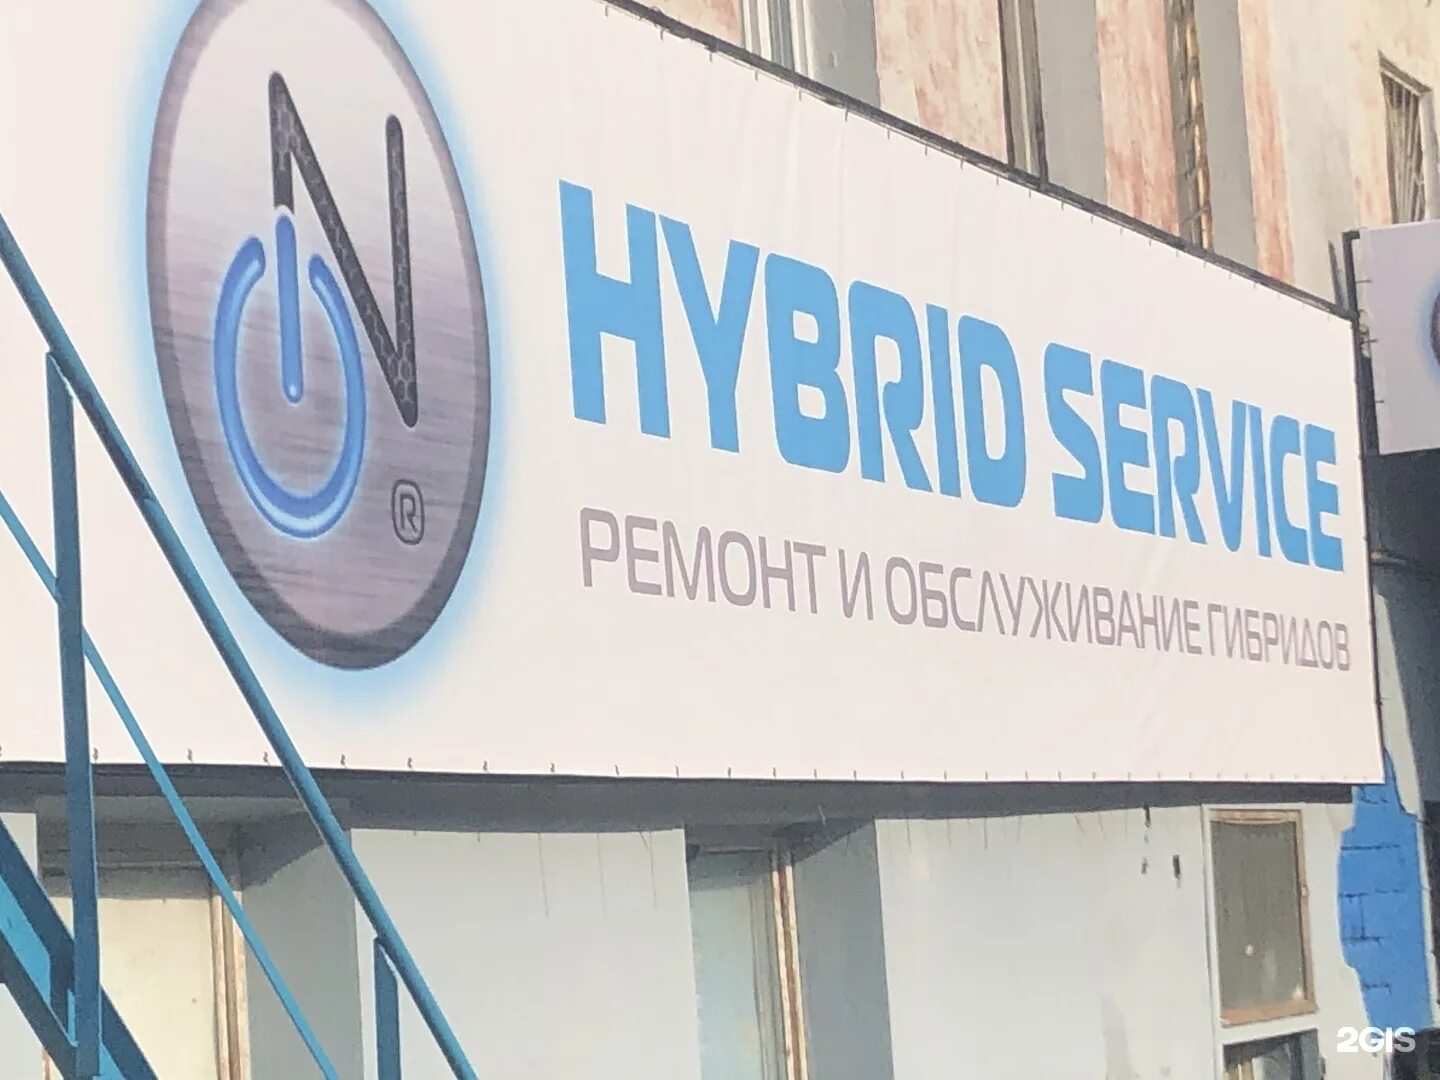 Hybrids москва. Гибрид сервис в Москве. Гибрид сервис. Hybrid service service.